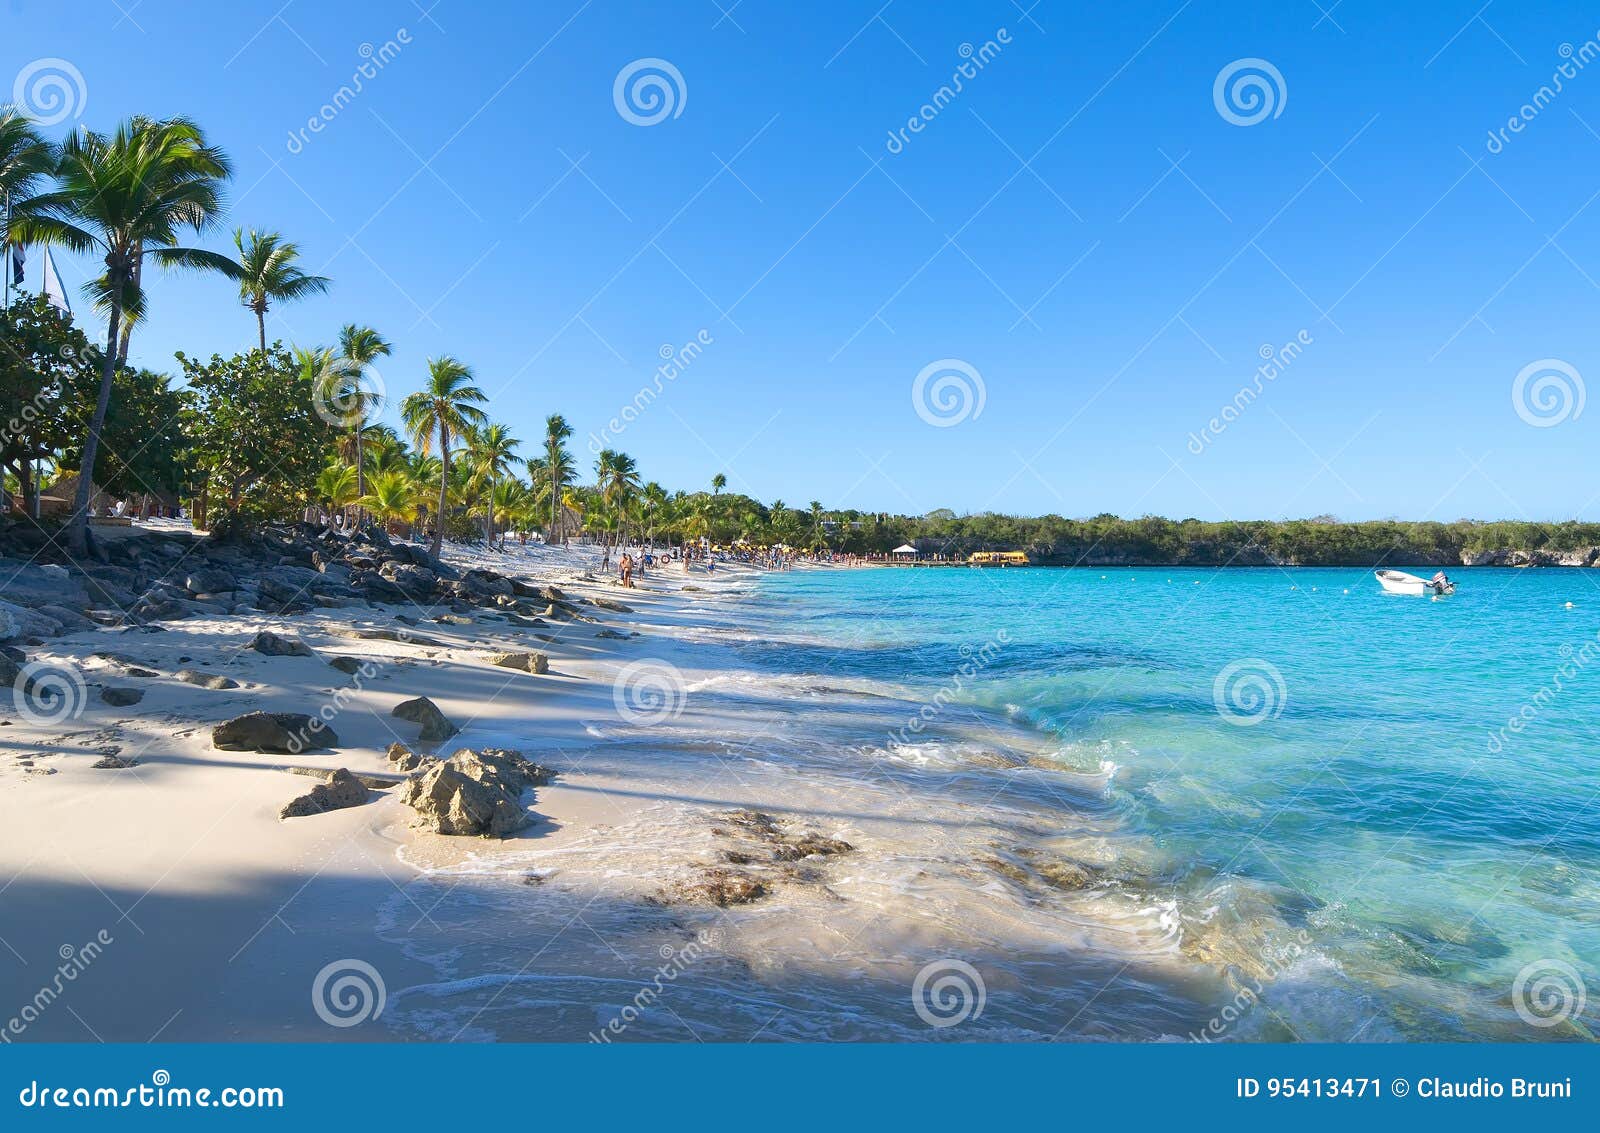 playa de la isla catalina - caribbean tropical sea